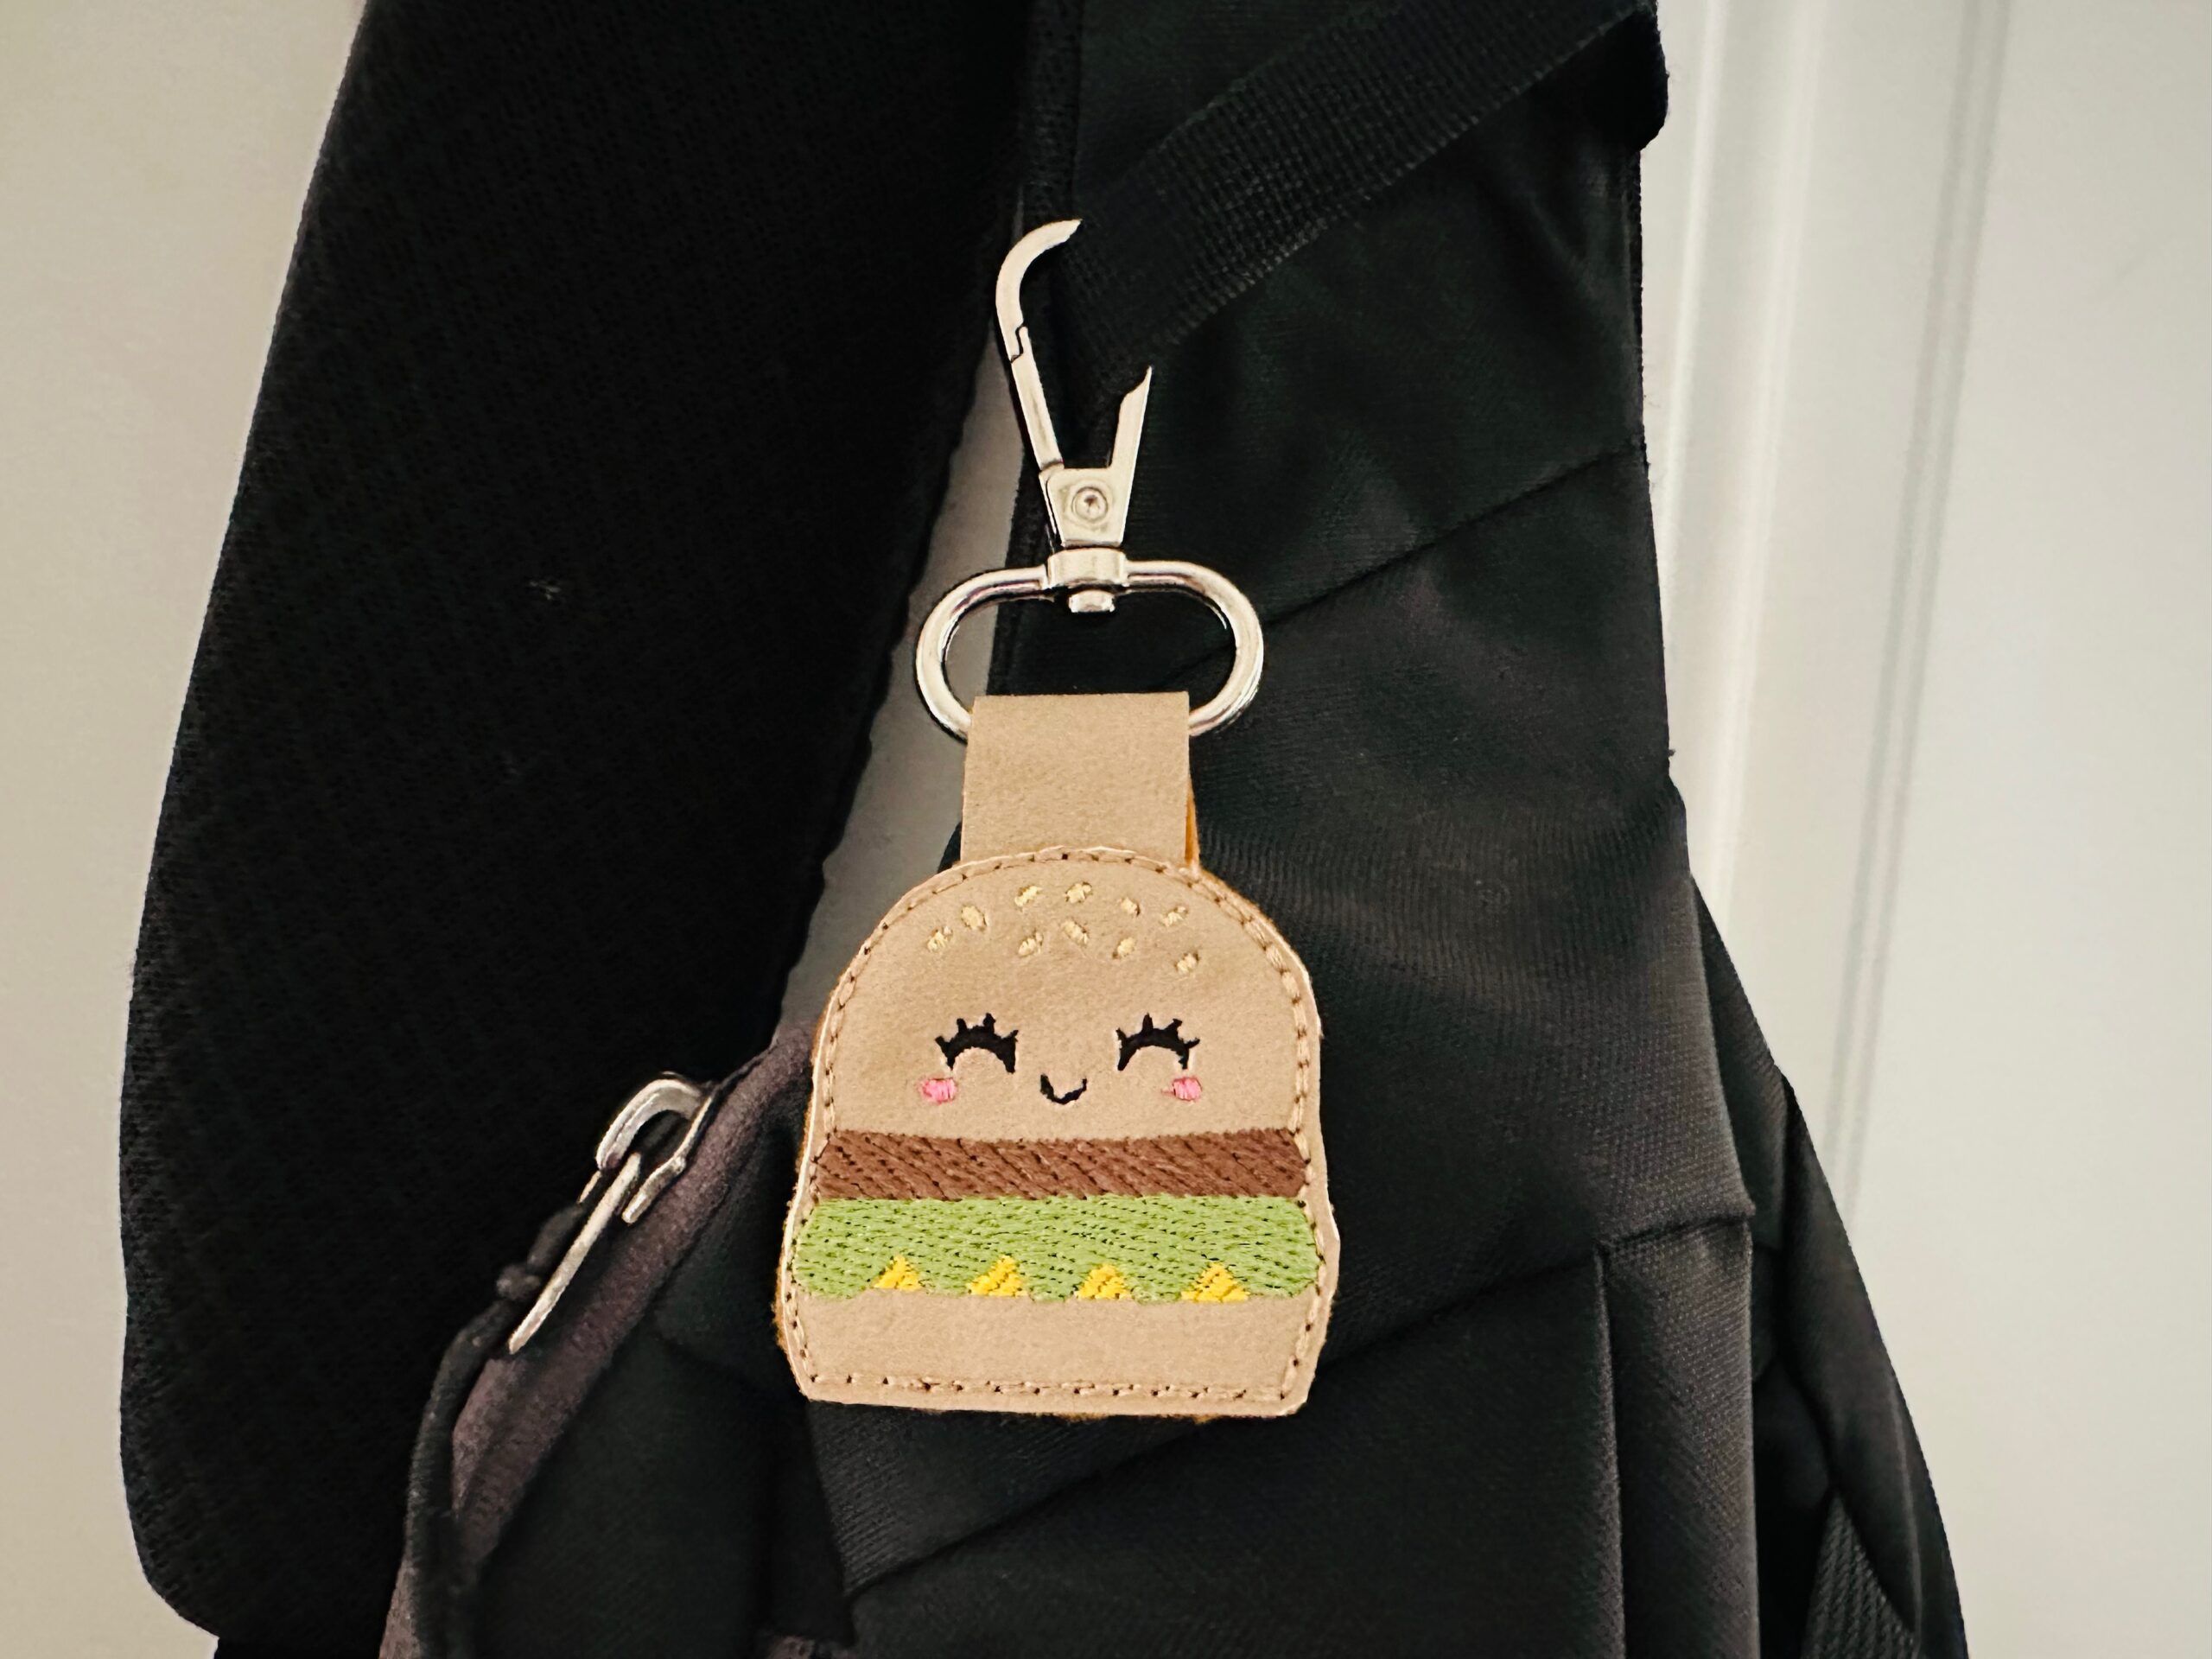 cheeseburger charm hanging on backpack